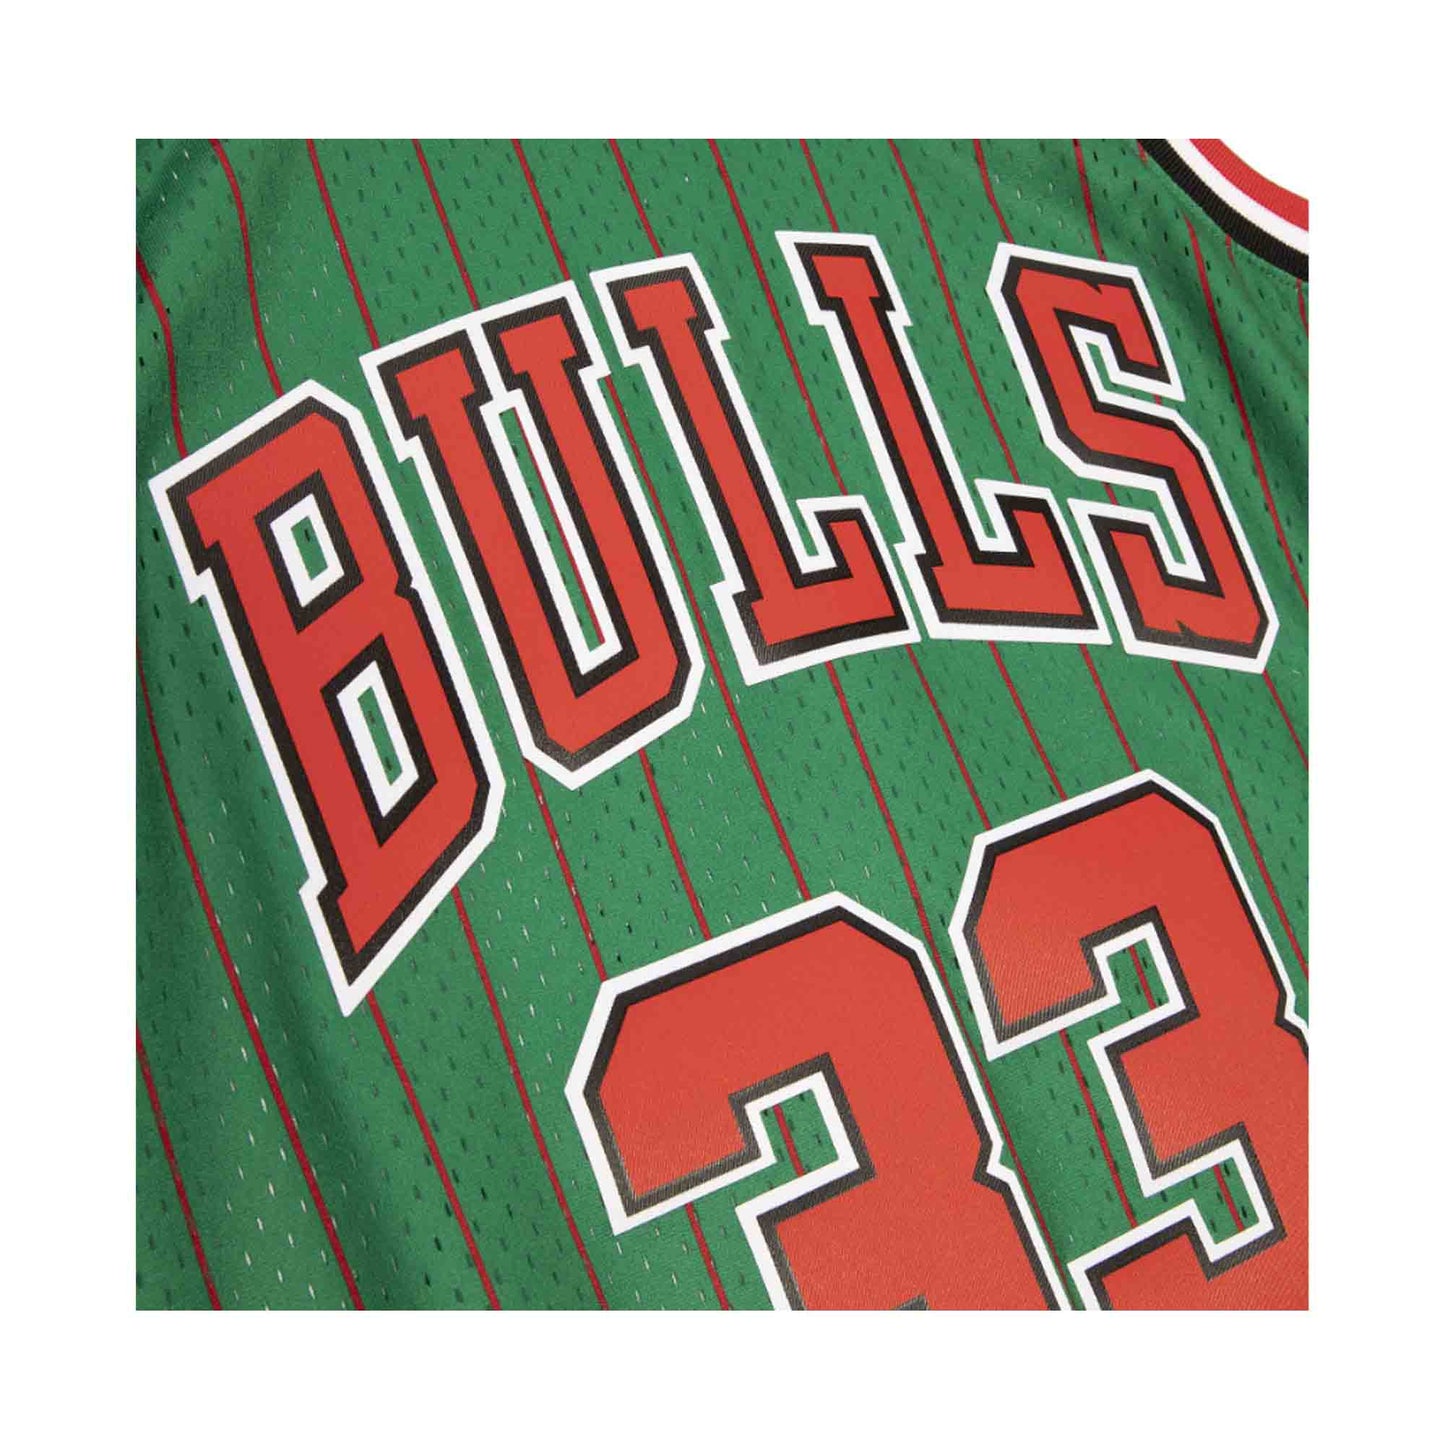 Reload Swingman Scottie Pippen Chicago Bulls 1995-96 Jersey